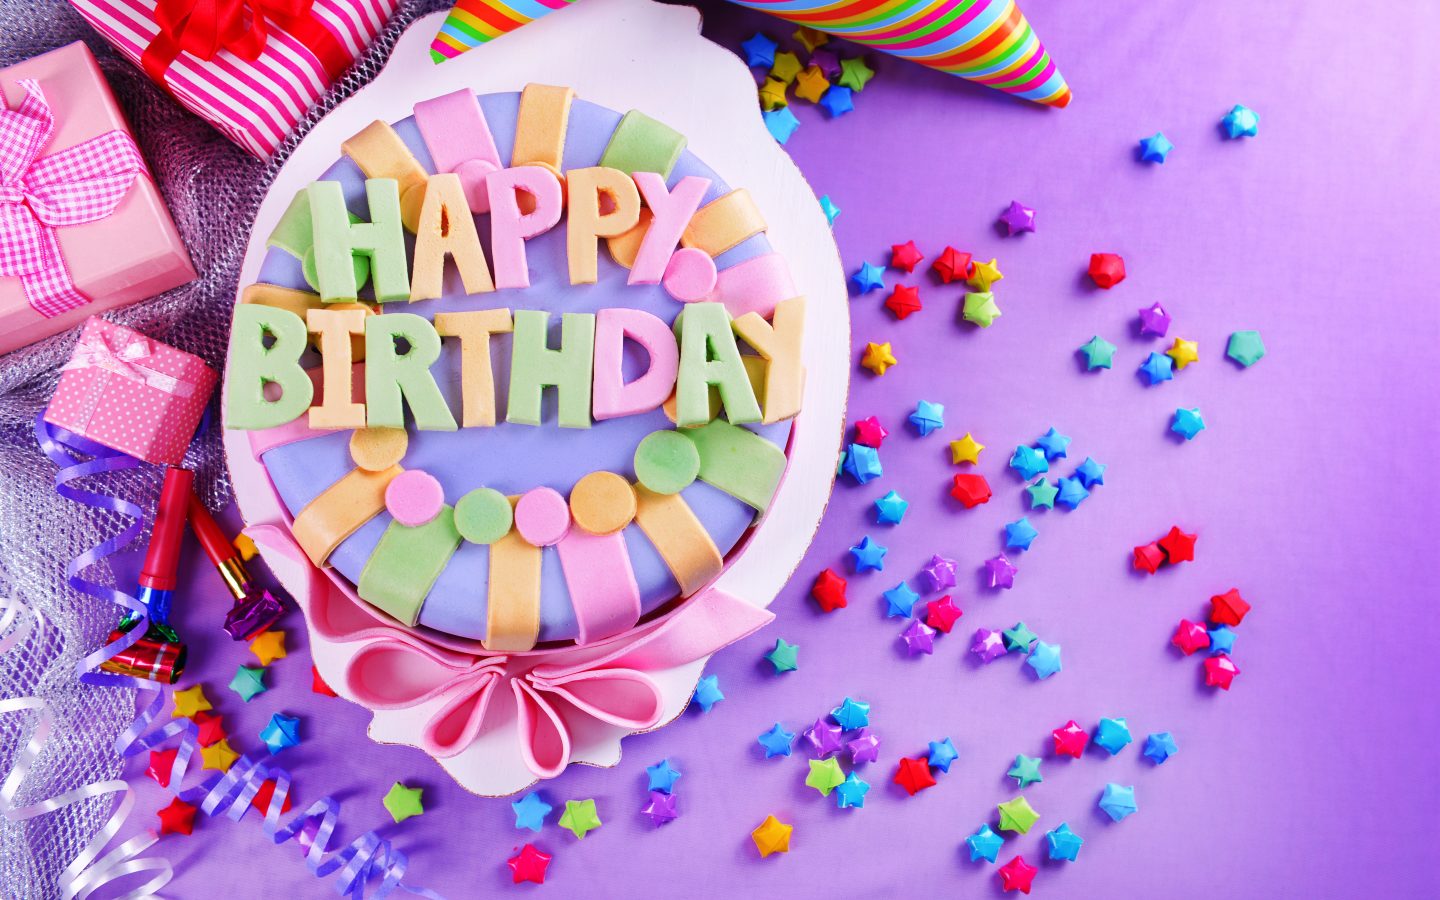 Happy-birthday-Cake-4k-decoration-wallpaper-facebook-photo-1440x900.jpg